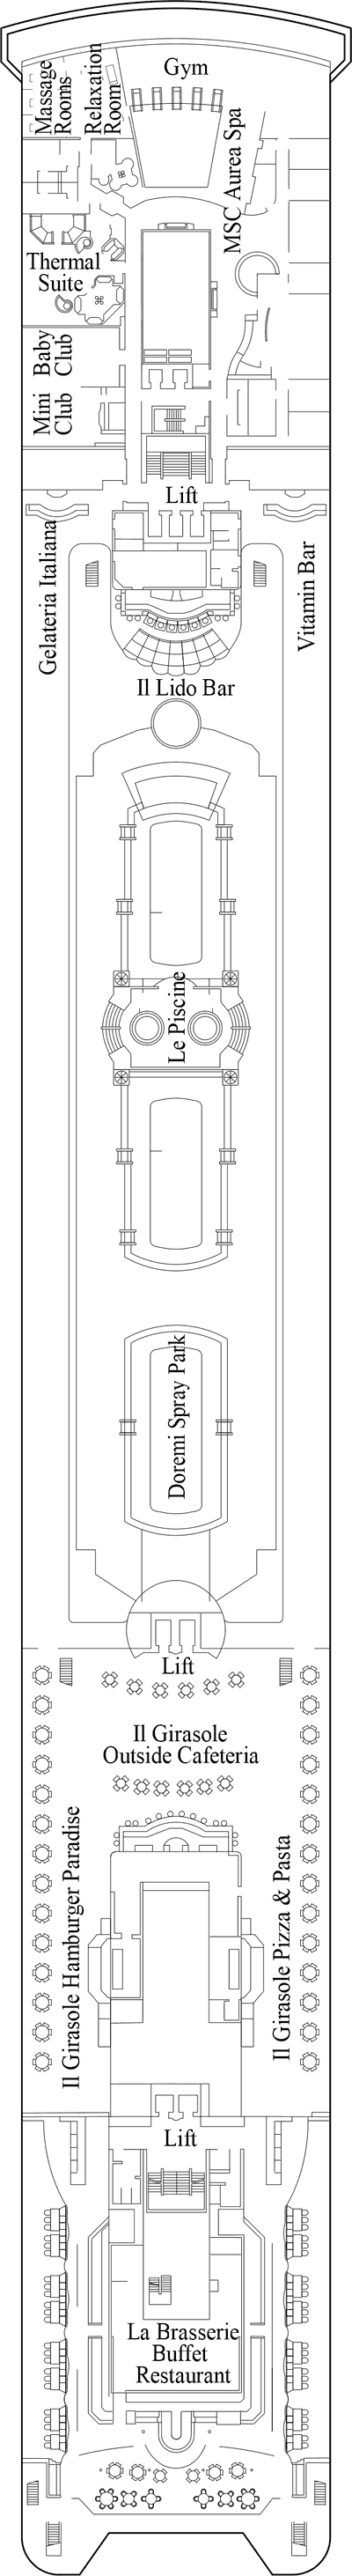 MSC Armonia - Decksplan Deck 11